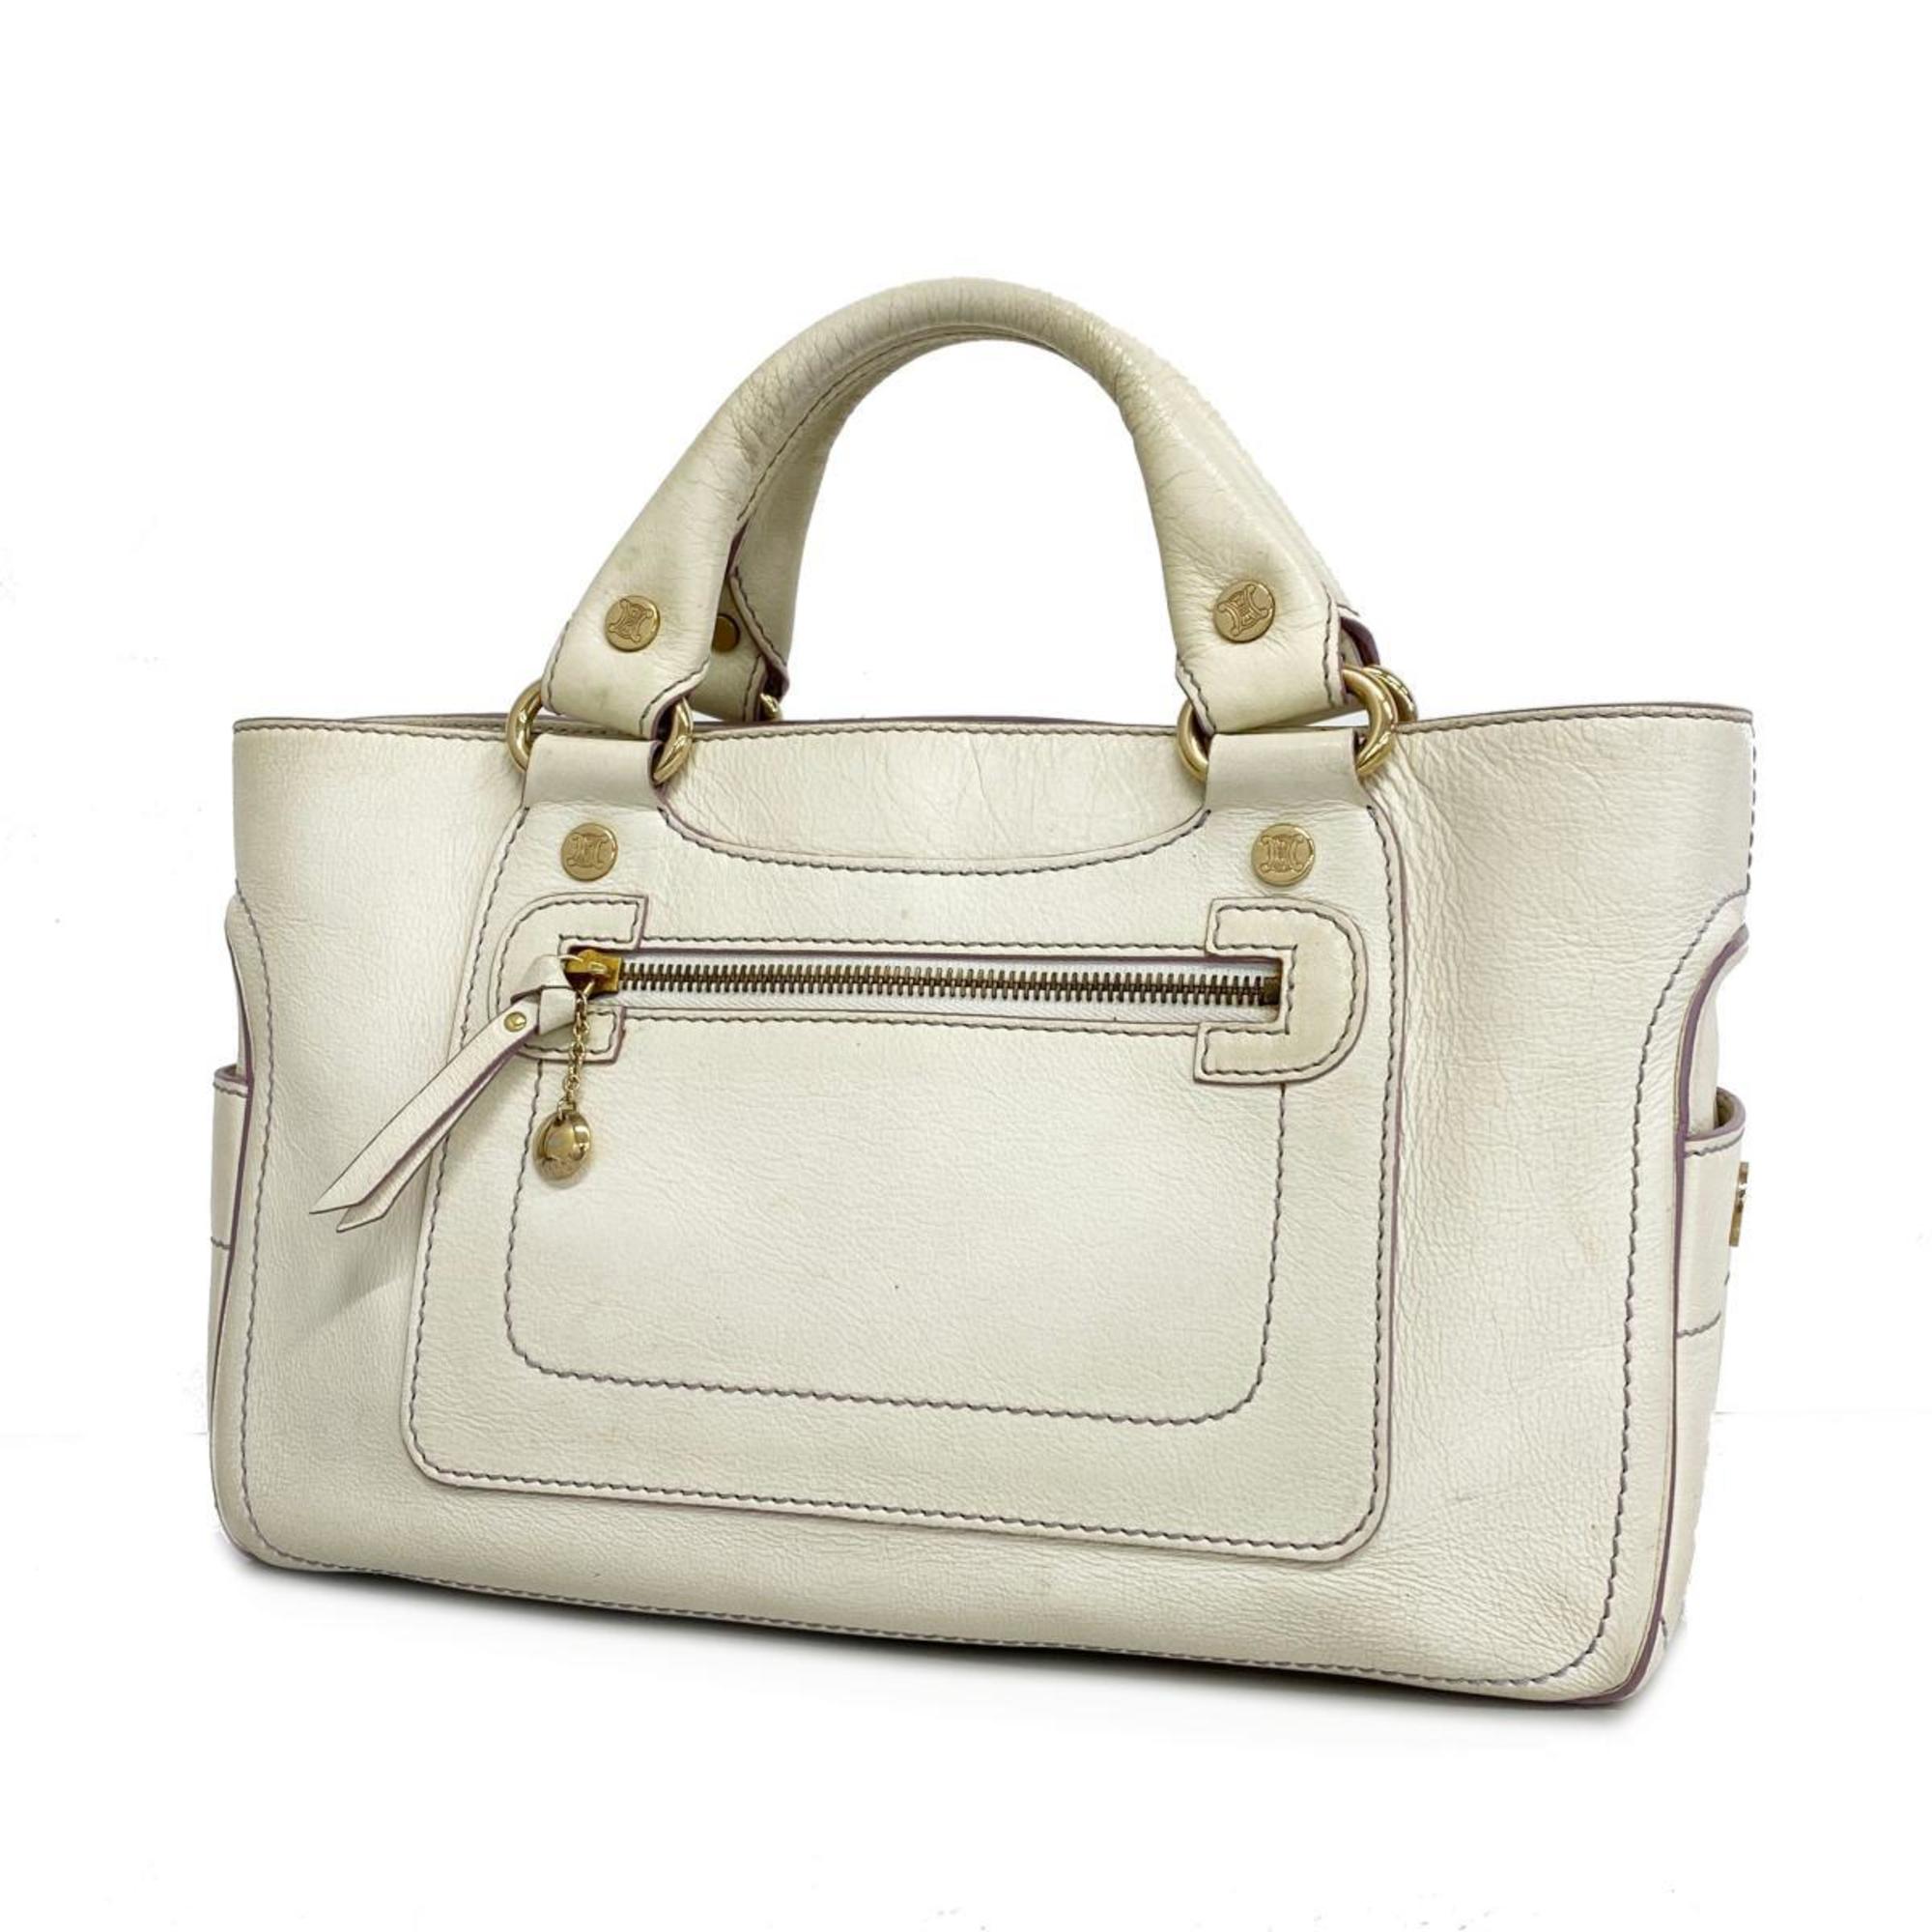 Celine handbag boogie leather white ladies